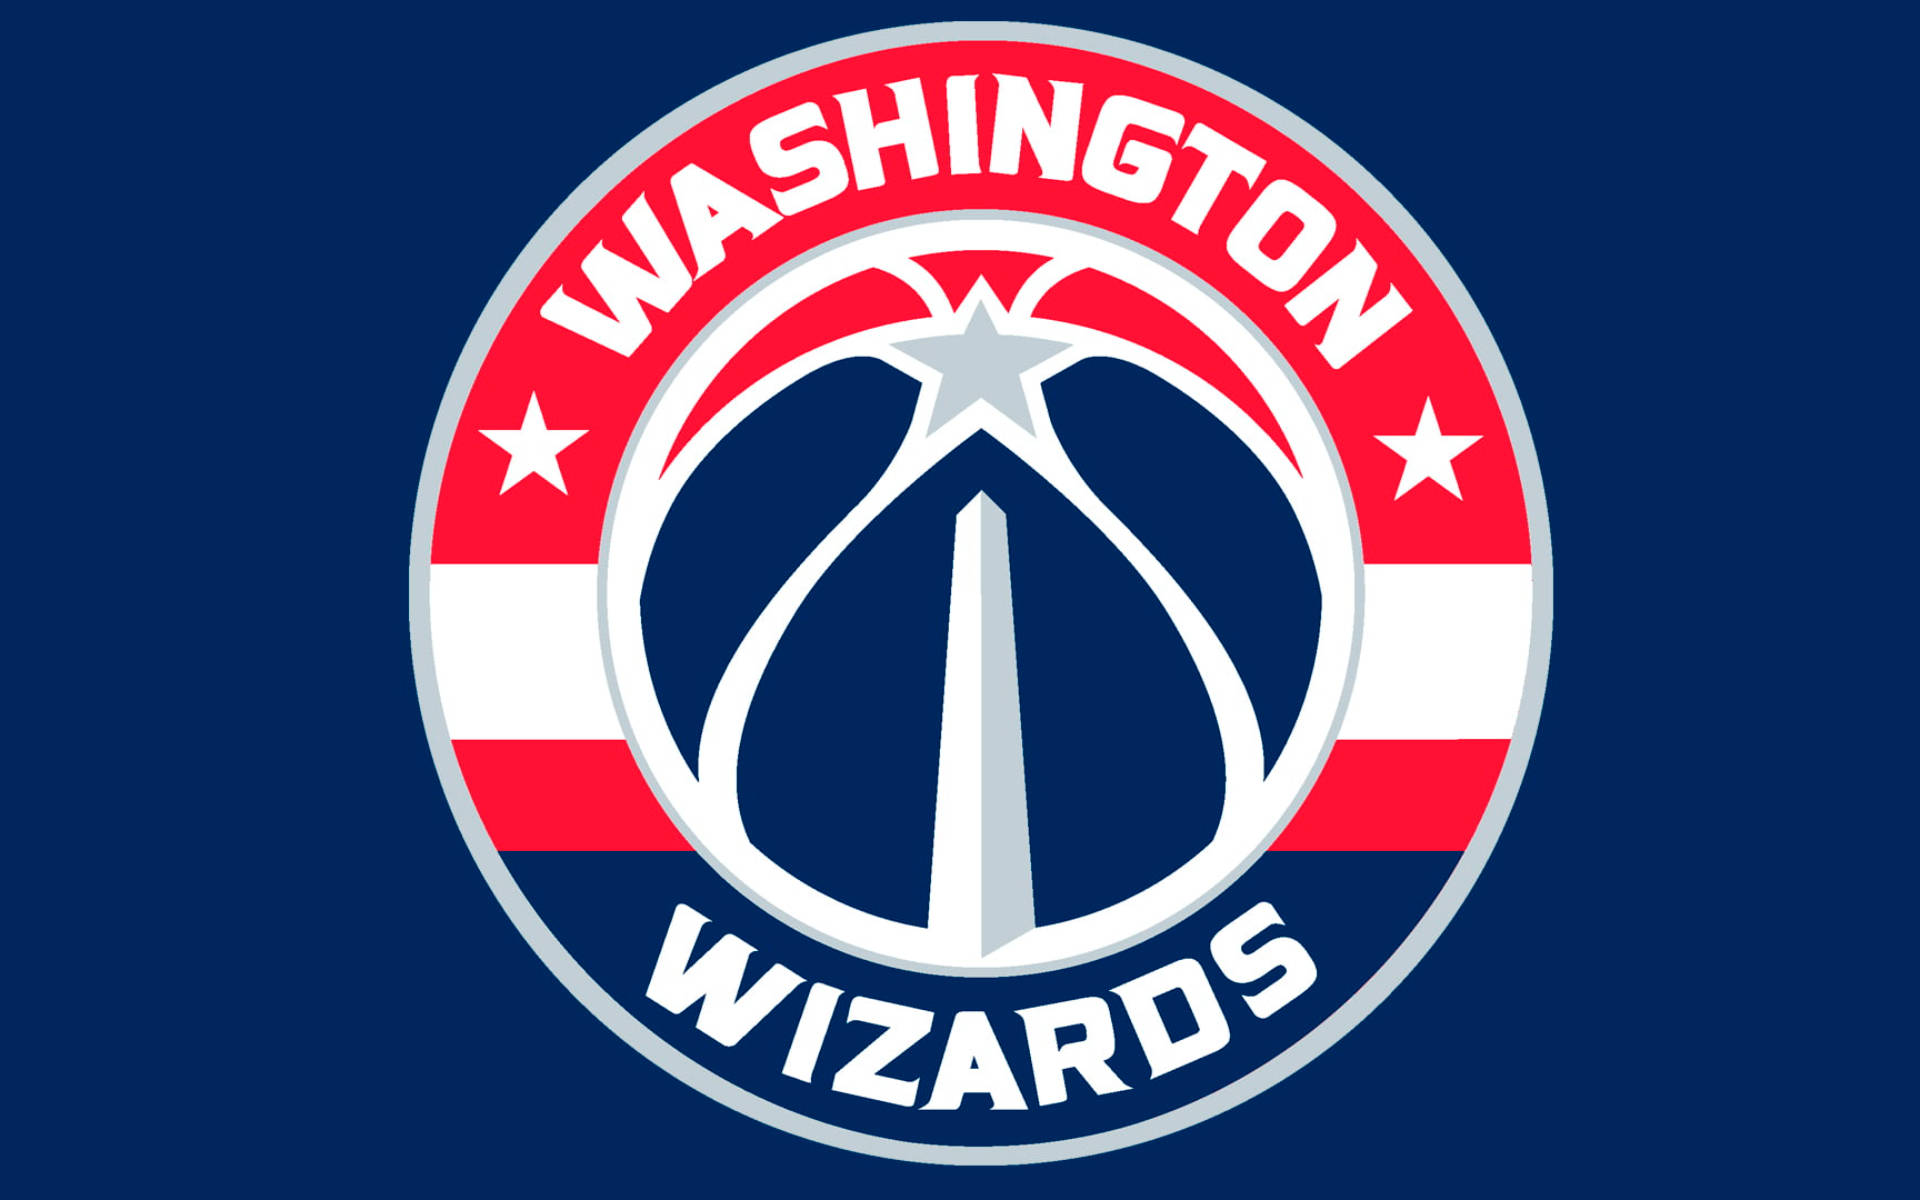 Washington Wizards Wallpapers